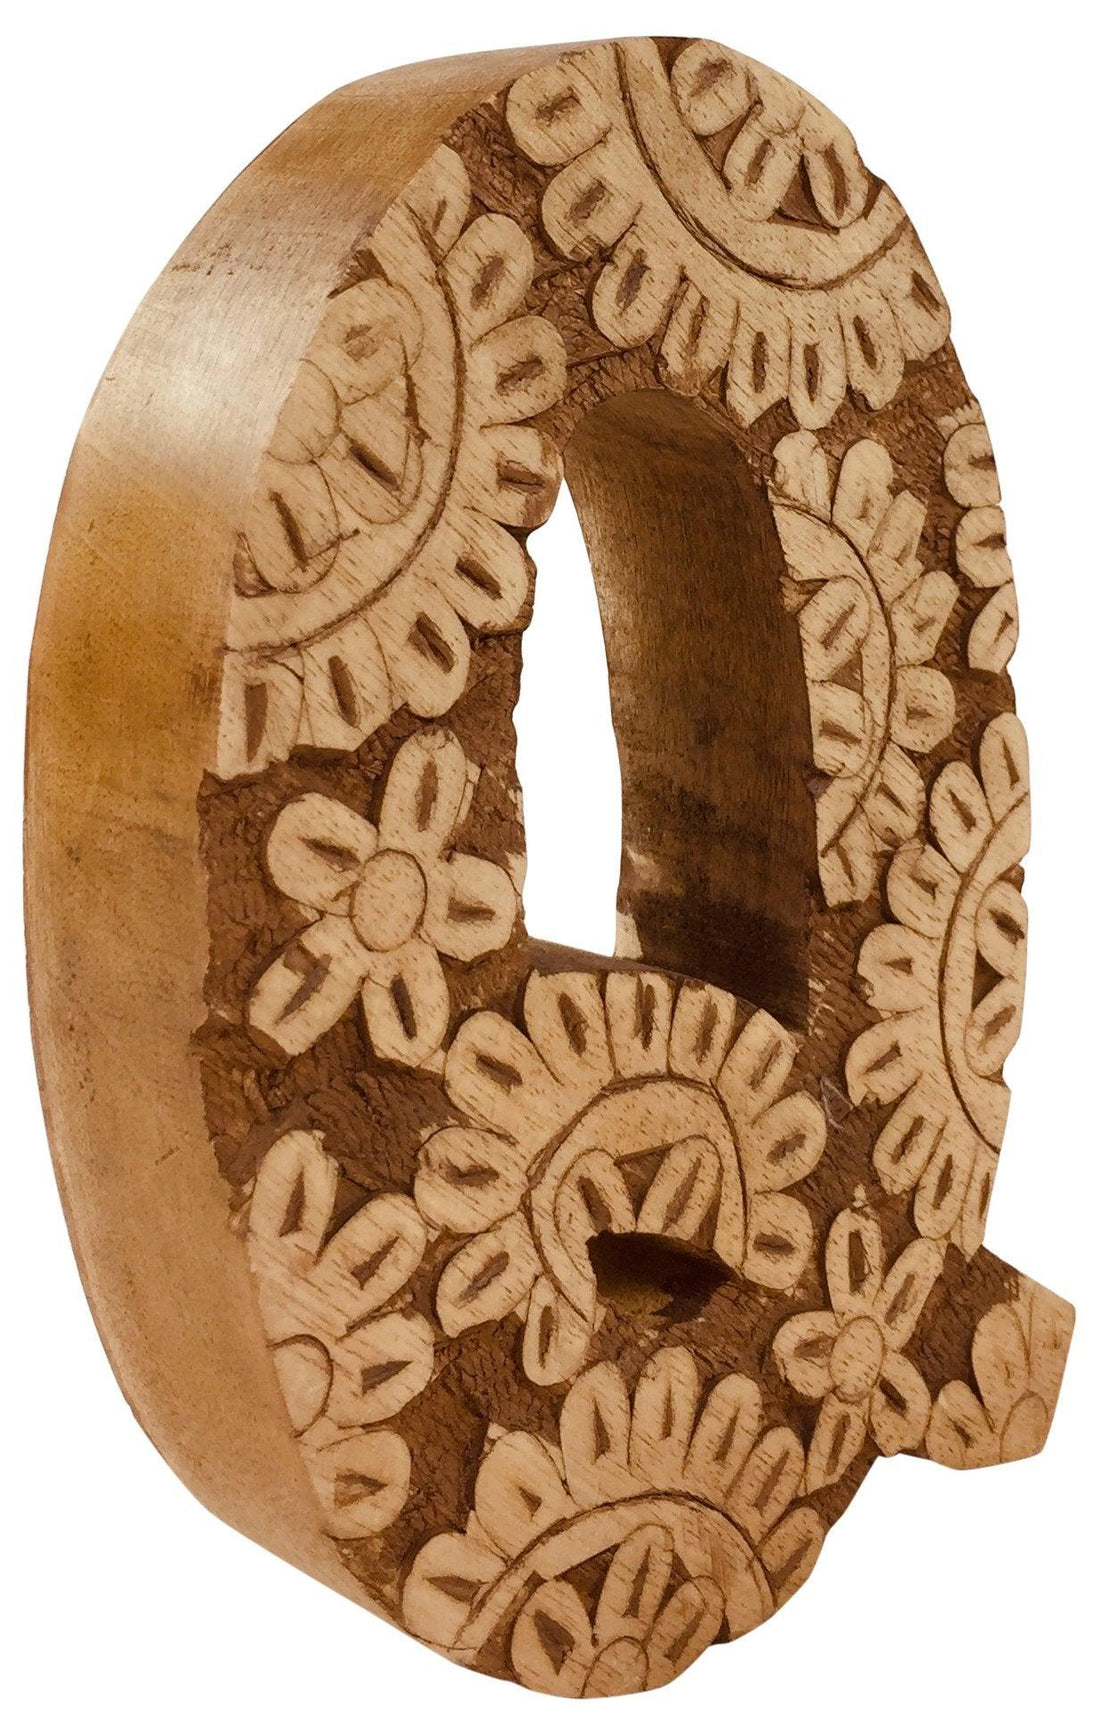 Hand Carved Wooden Flower Letter Q - £12.99 - Single Letters 